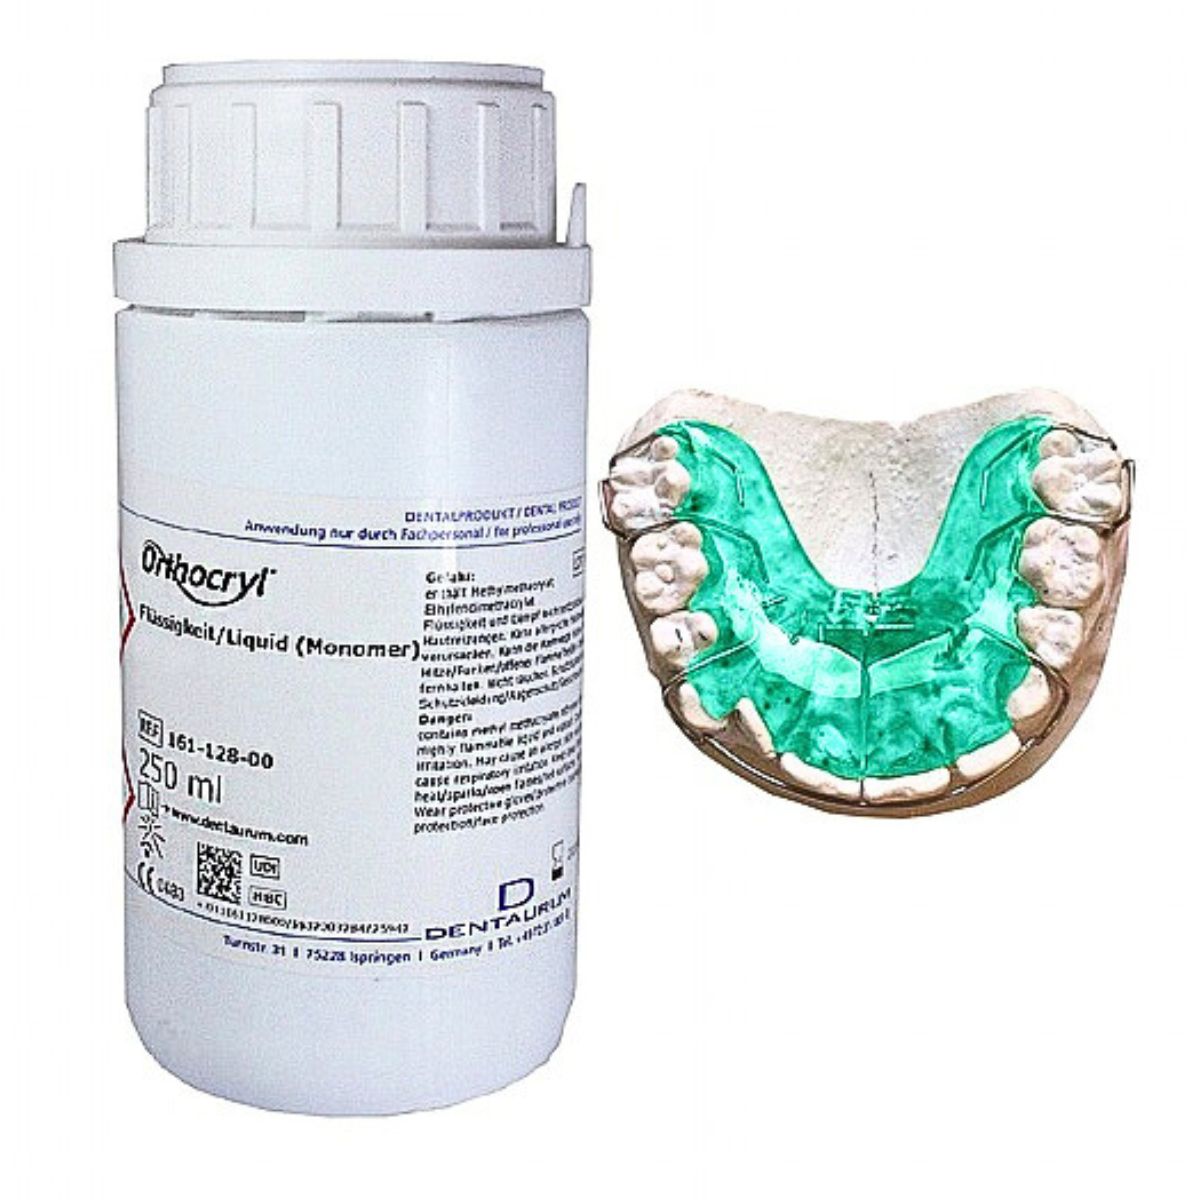 Dentaurum Orthocryl Turquoise Acrylic Liquid 250ml